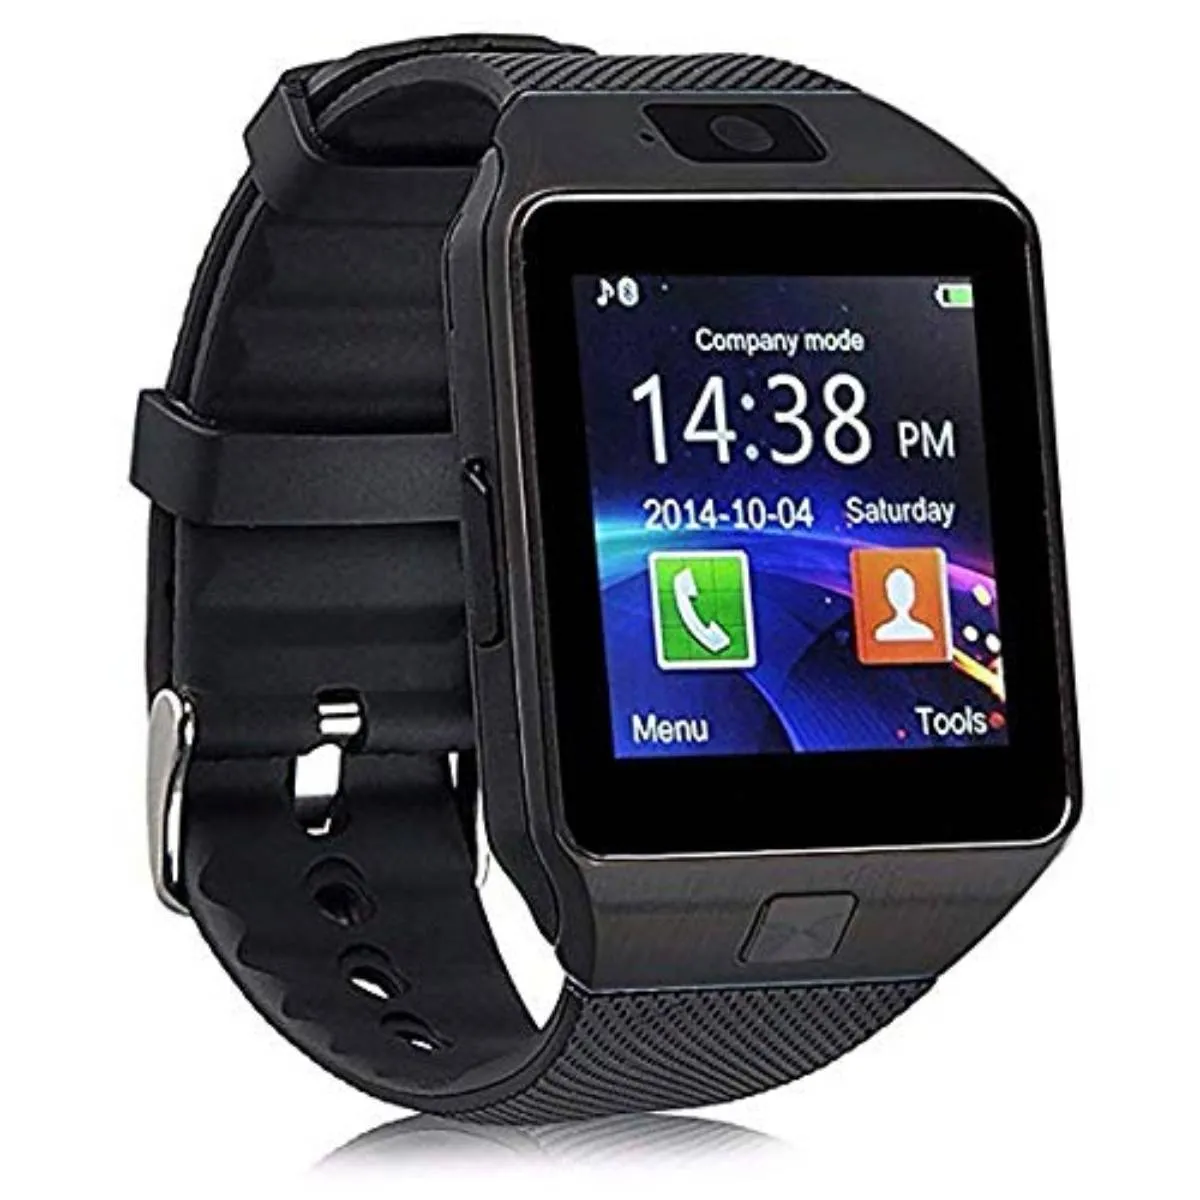 Nxtpower SM-7001 Fitness Smart watch under Rs.500